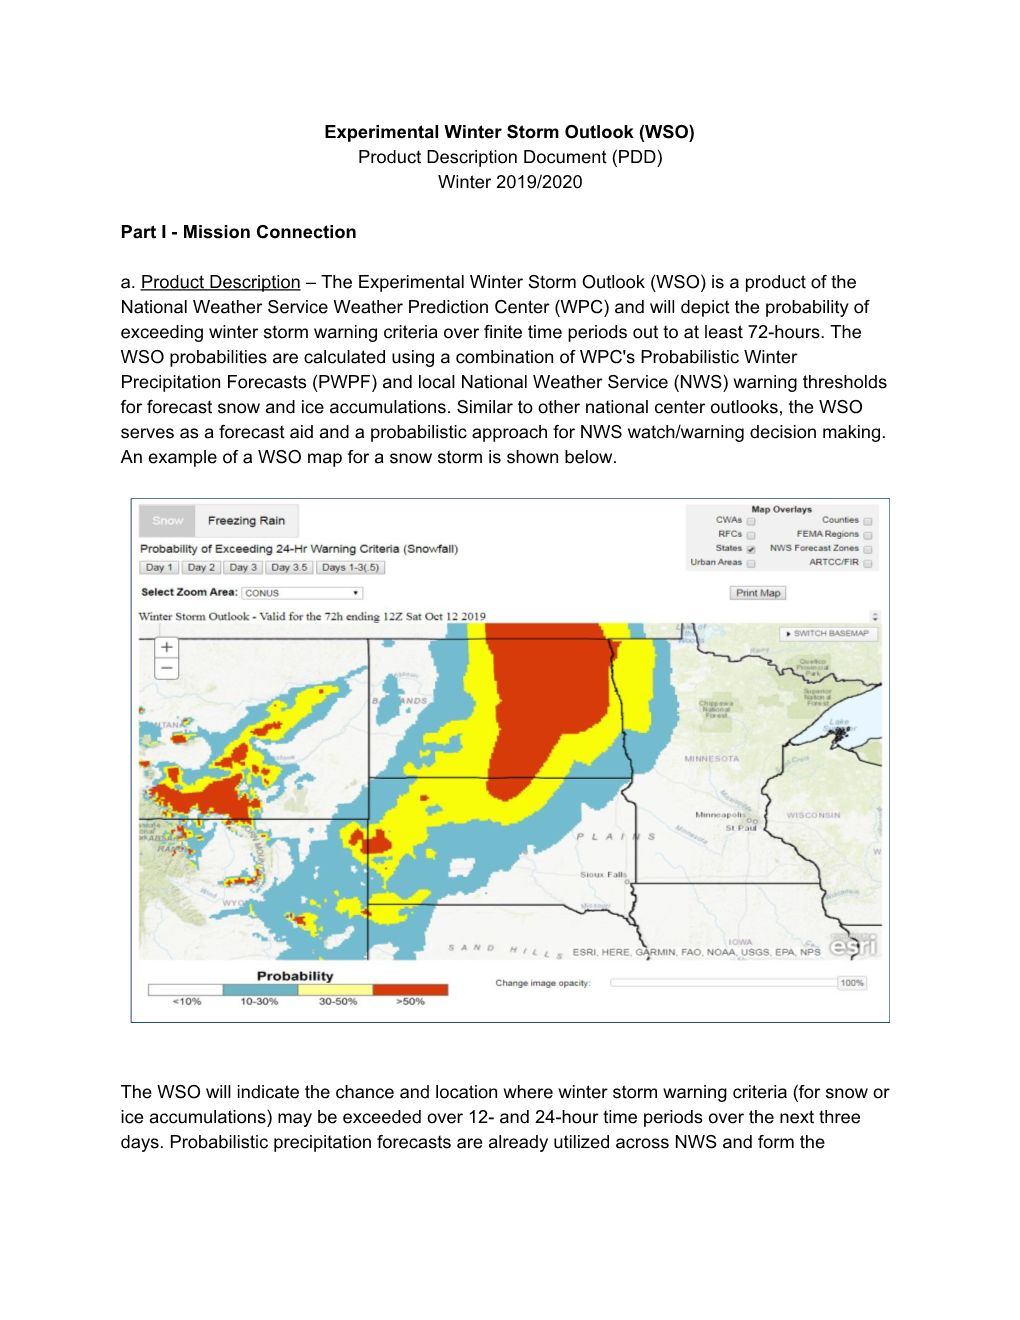 Experimental Winter Storm Outlook (WSO) Product Description Document (PDD) Winter 2019/2020